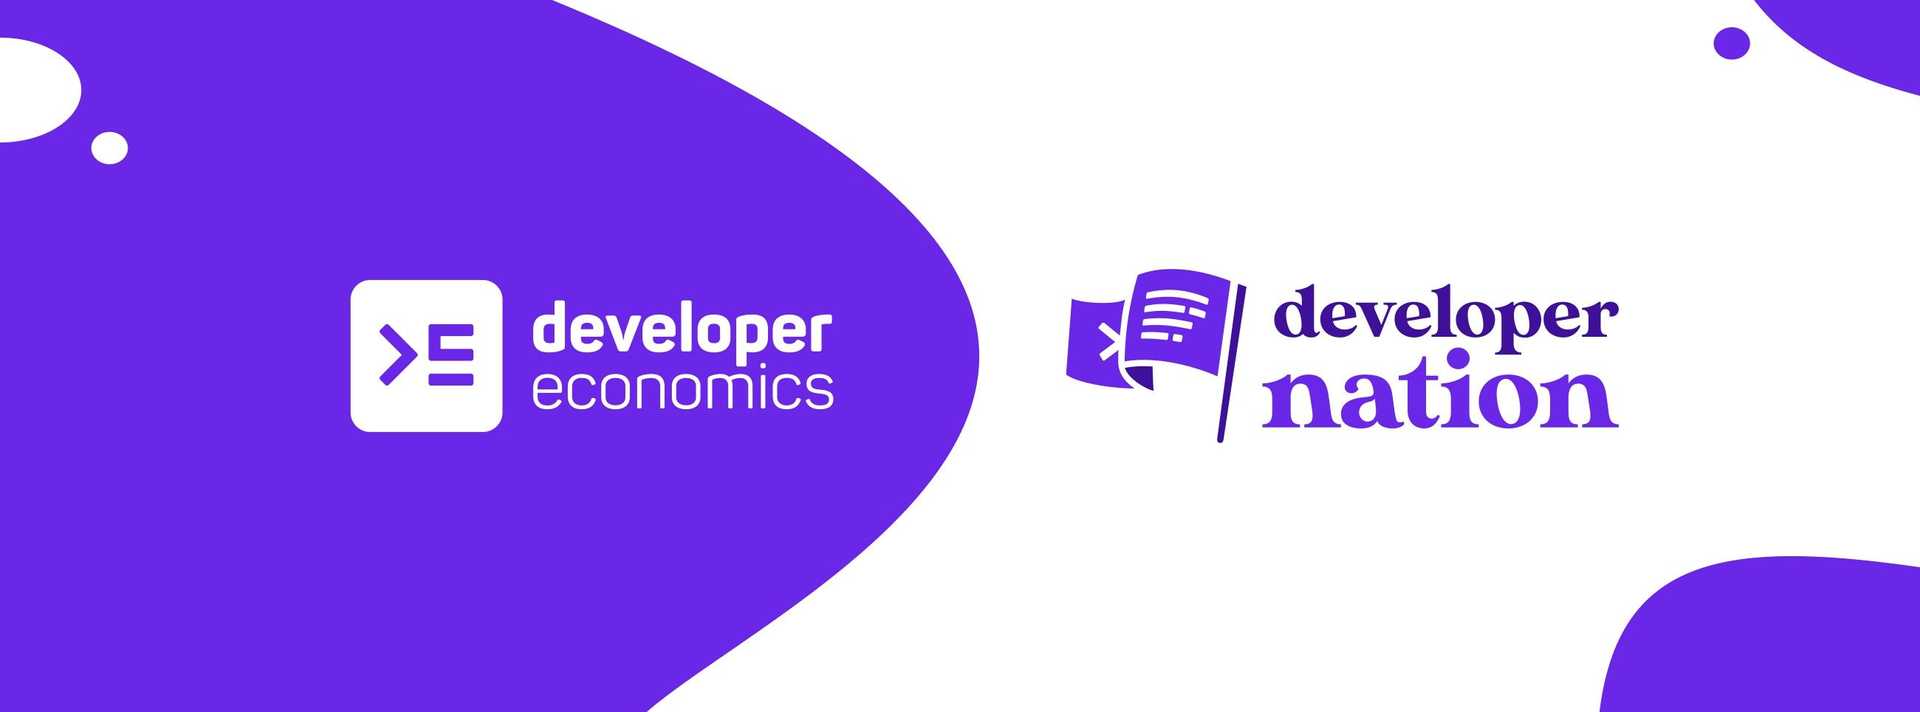 developer nation community, developer nation survey